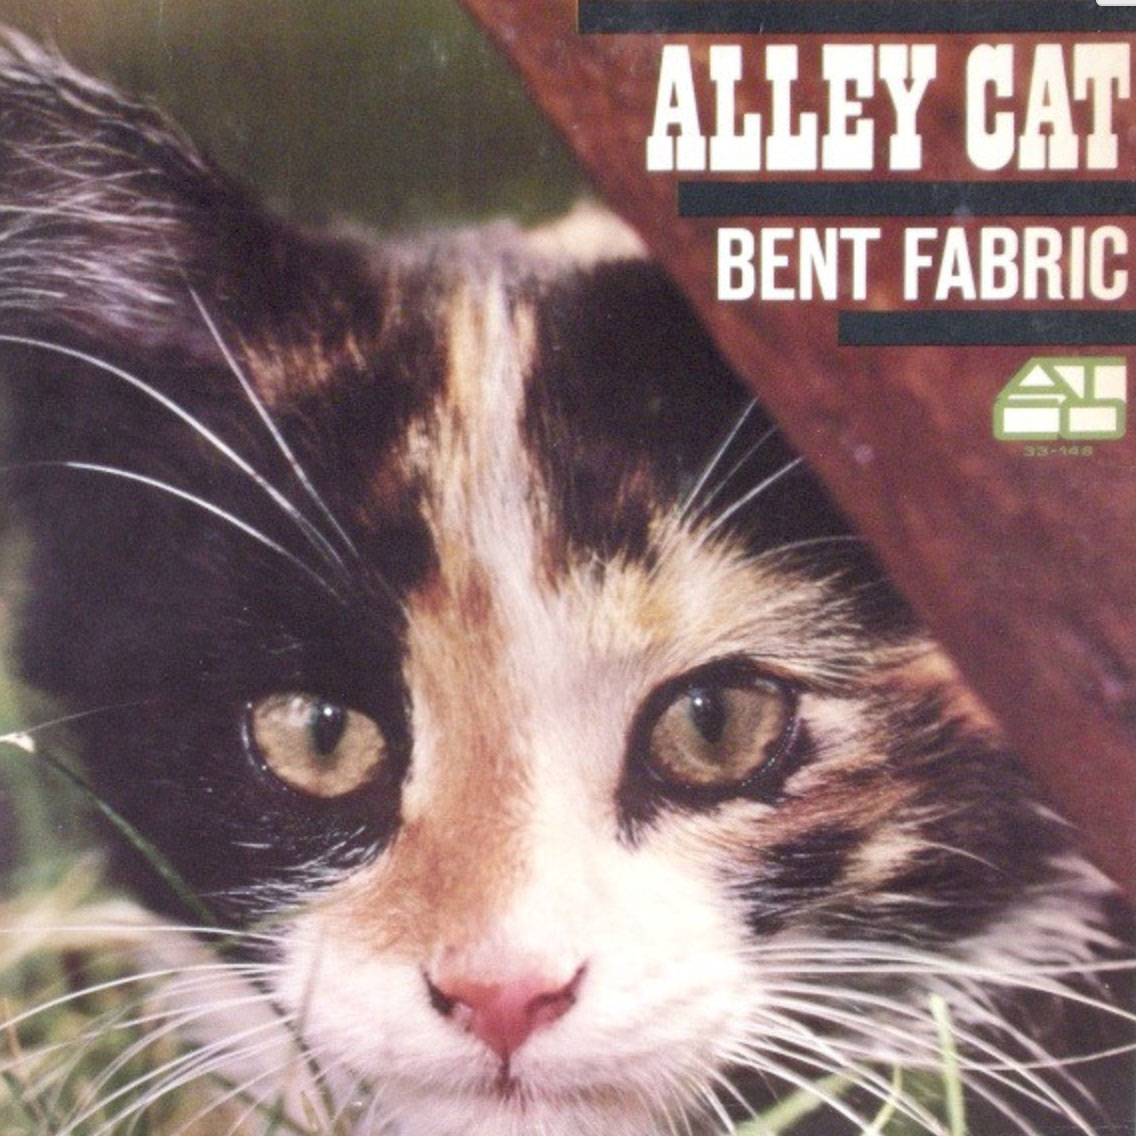 Alley-cat